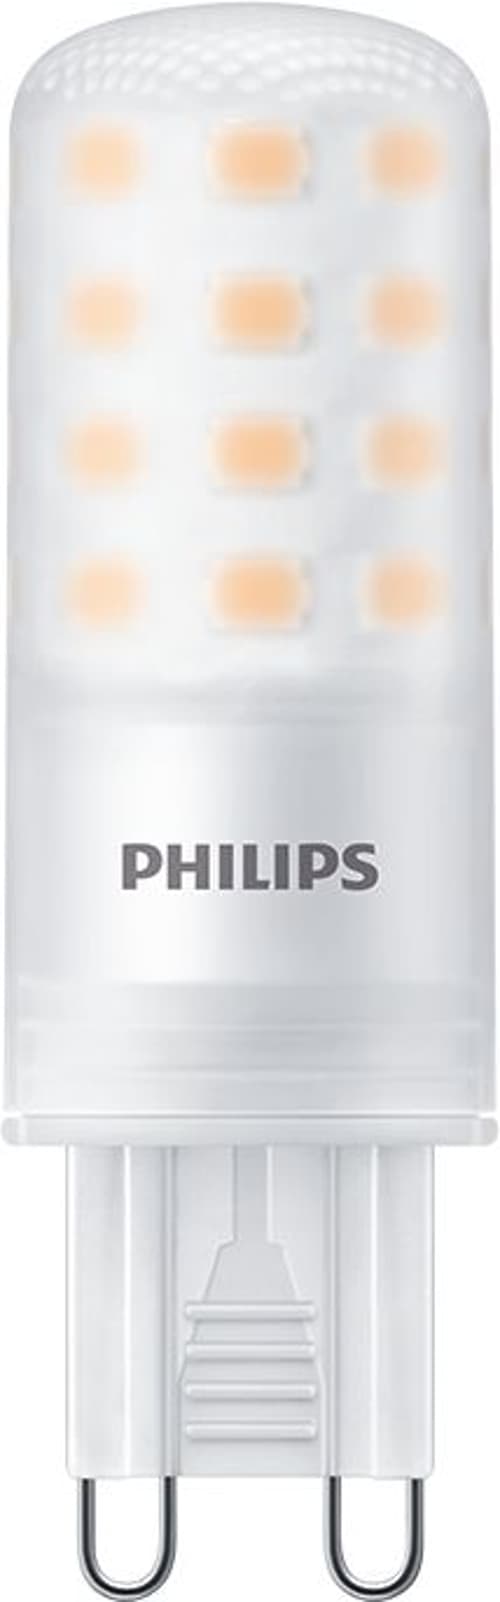 Philips Led G9 Kapsel 40w Dimbar 480lm